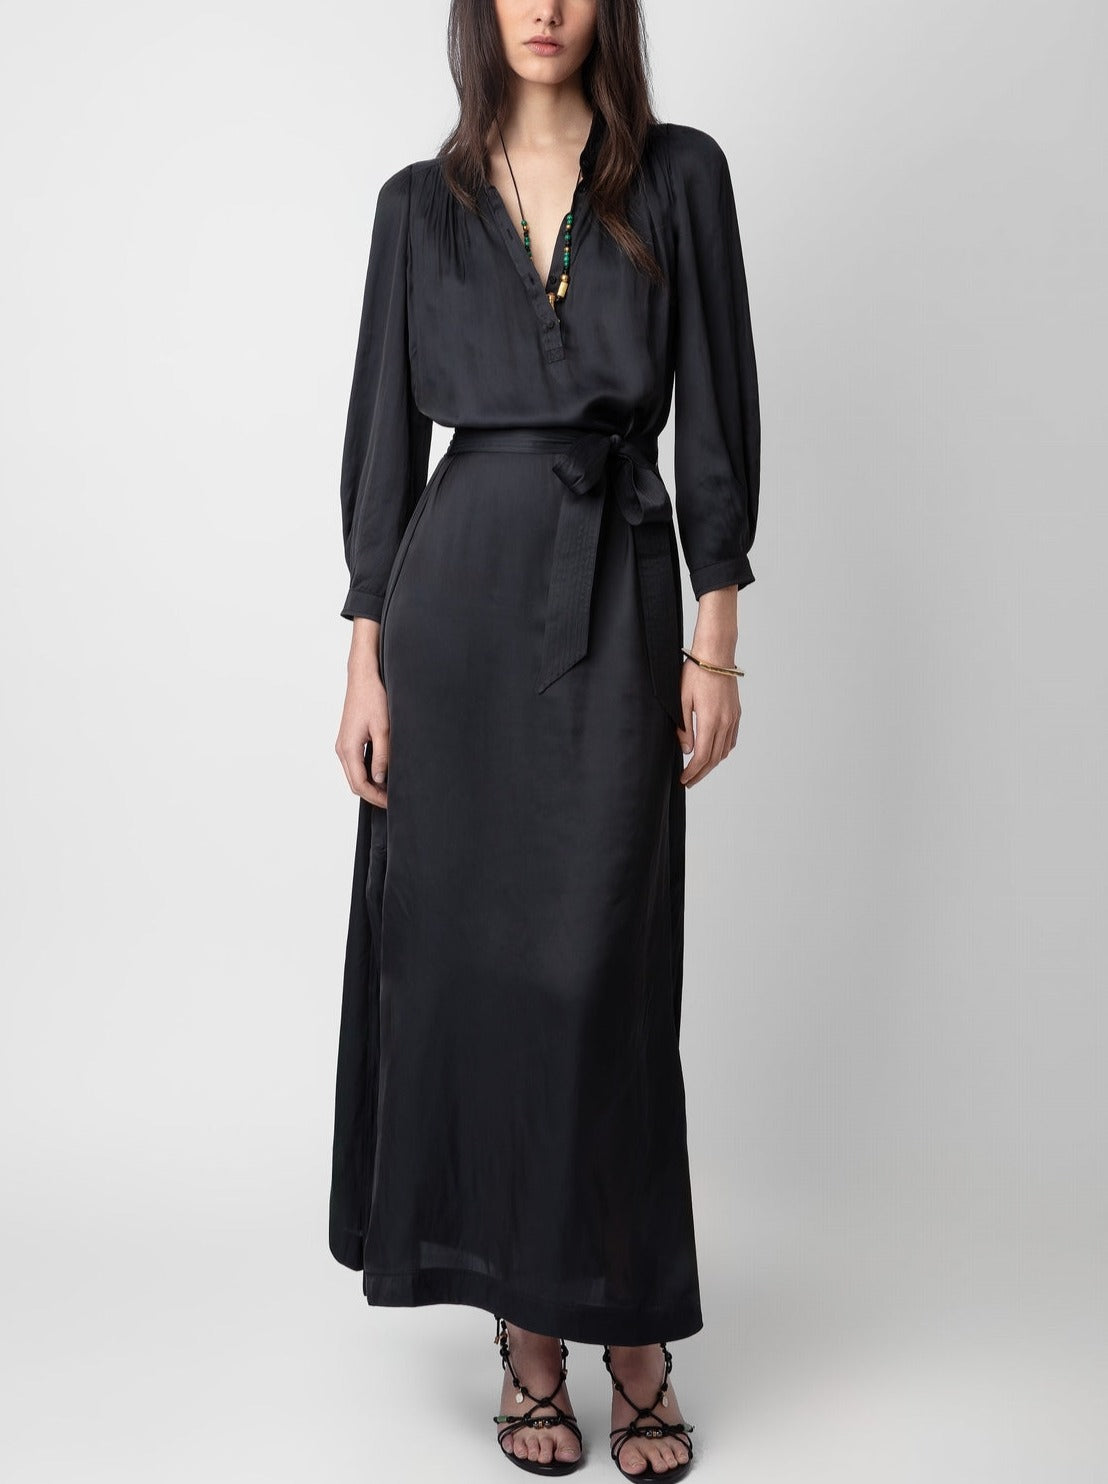 RITCHIL SATIN dress, black